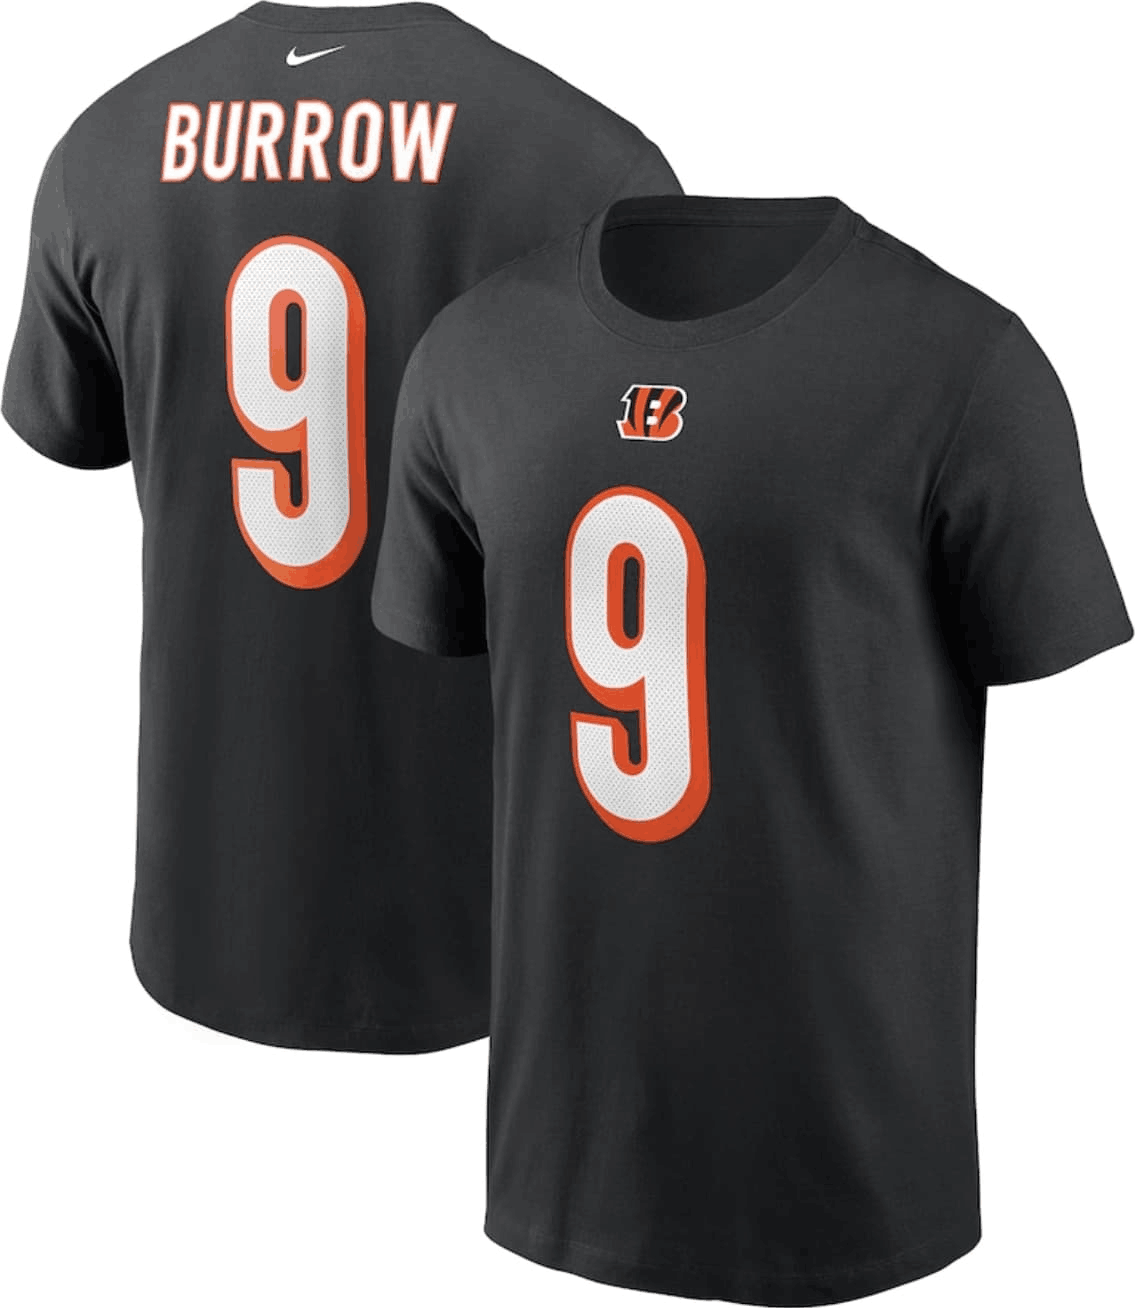 Men's Cincinnati Bengals Black #9 Joe Burrow T-Shirt